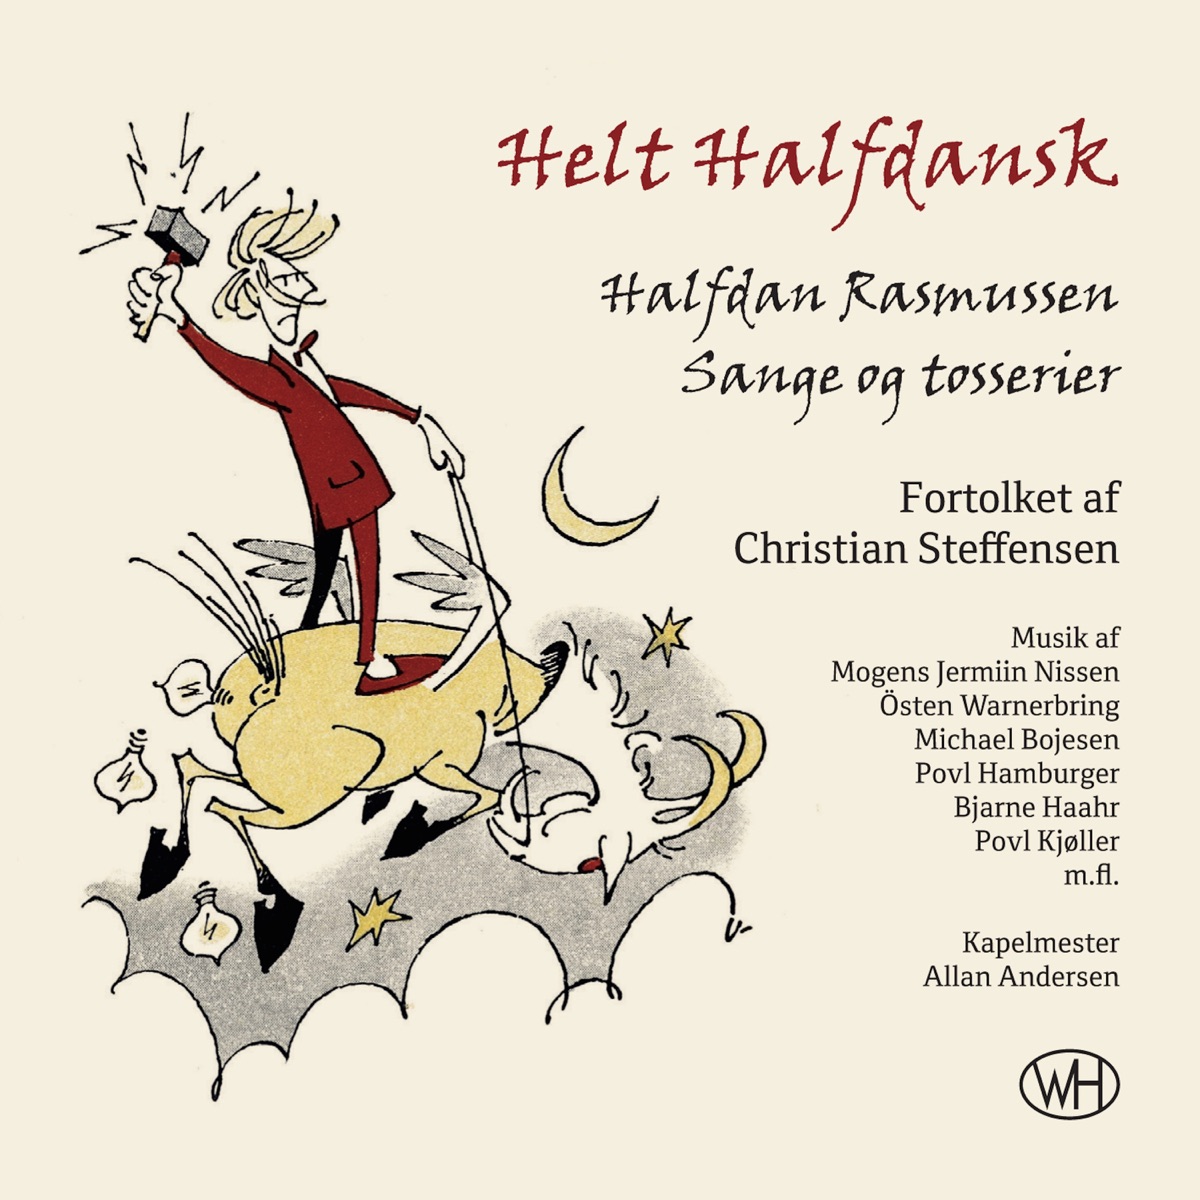 Andersen - Udsigt i kikkert by Christian Steffensen on Apple Music